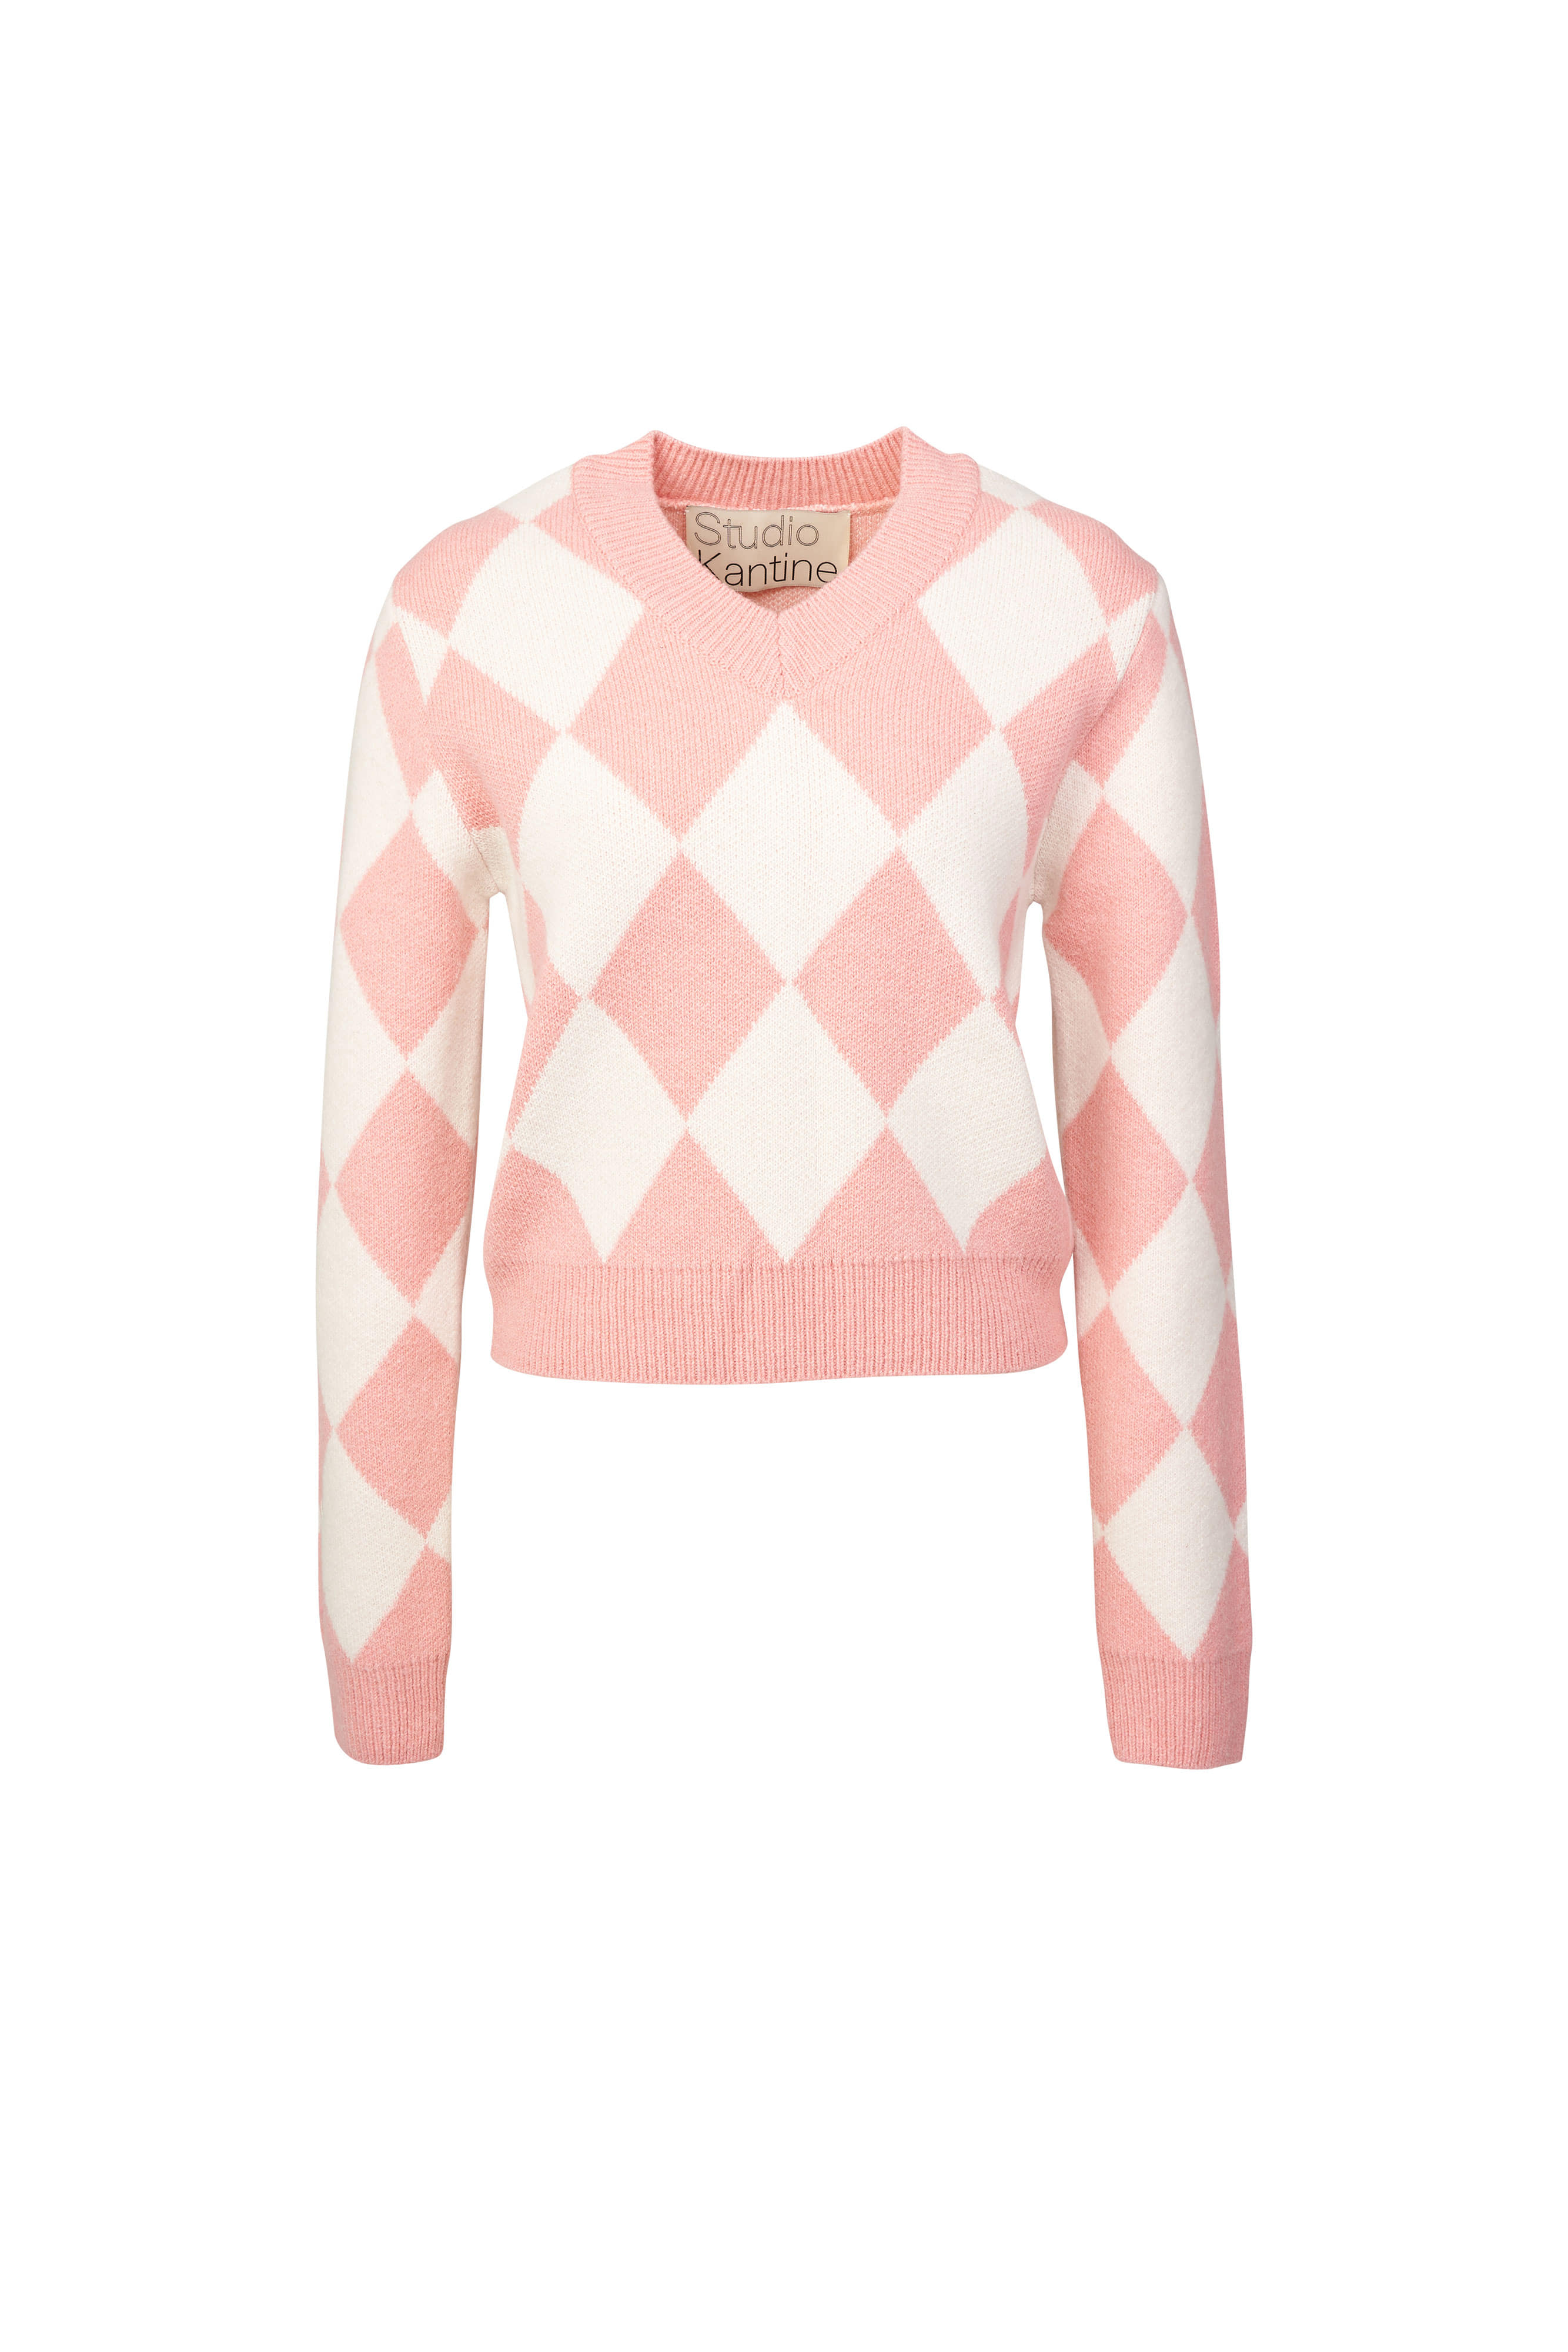 Argyle jacquard short pullover [pink]